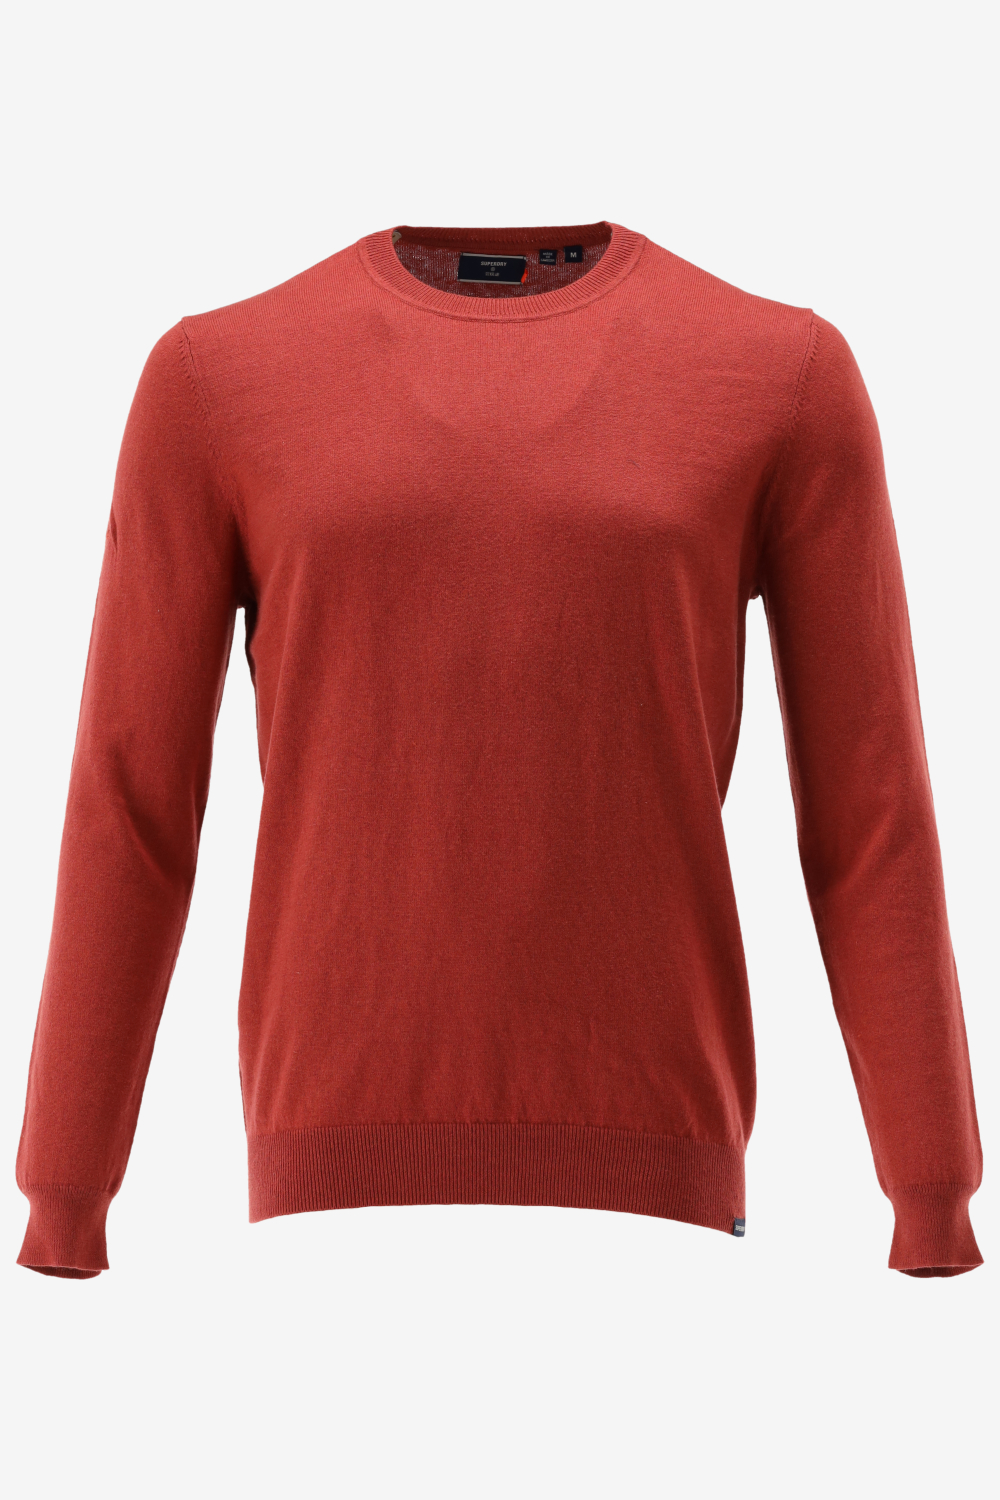 renderen vlam bladzijde Superdry Outlet Sale - Sweaters - T-shirts - Polo's - - Bergmans Fashion  Outlet - Webshop | GRATIS VERZENDING!